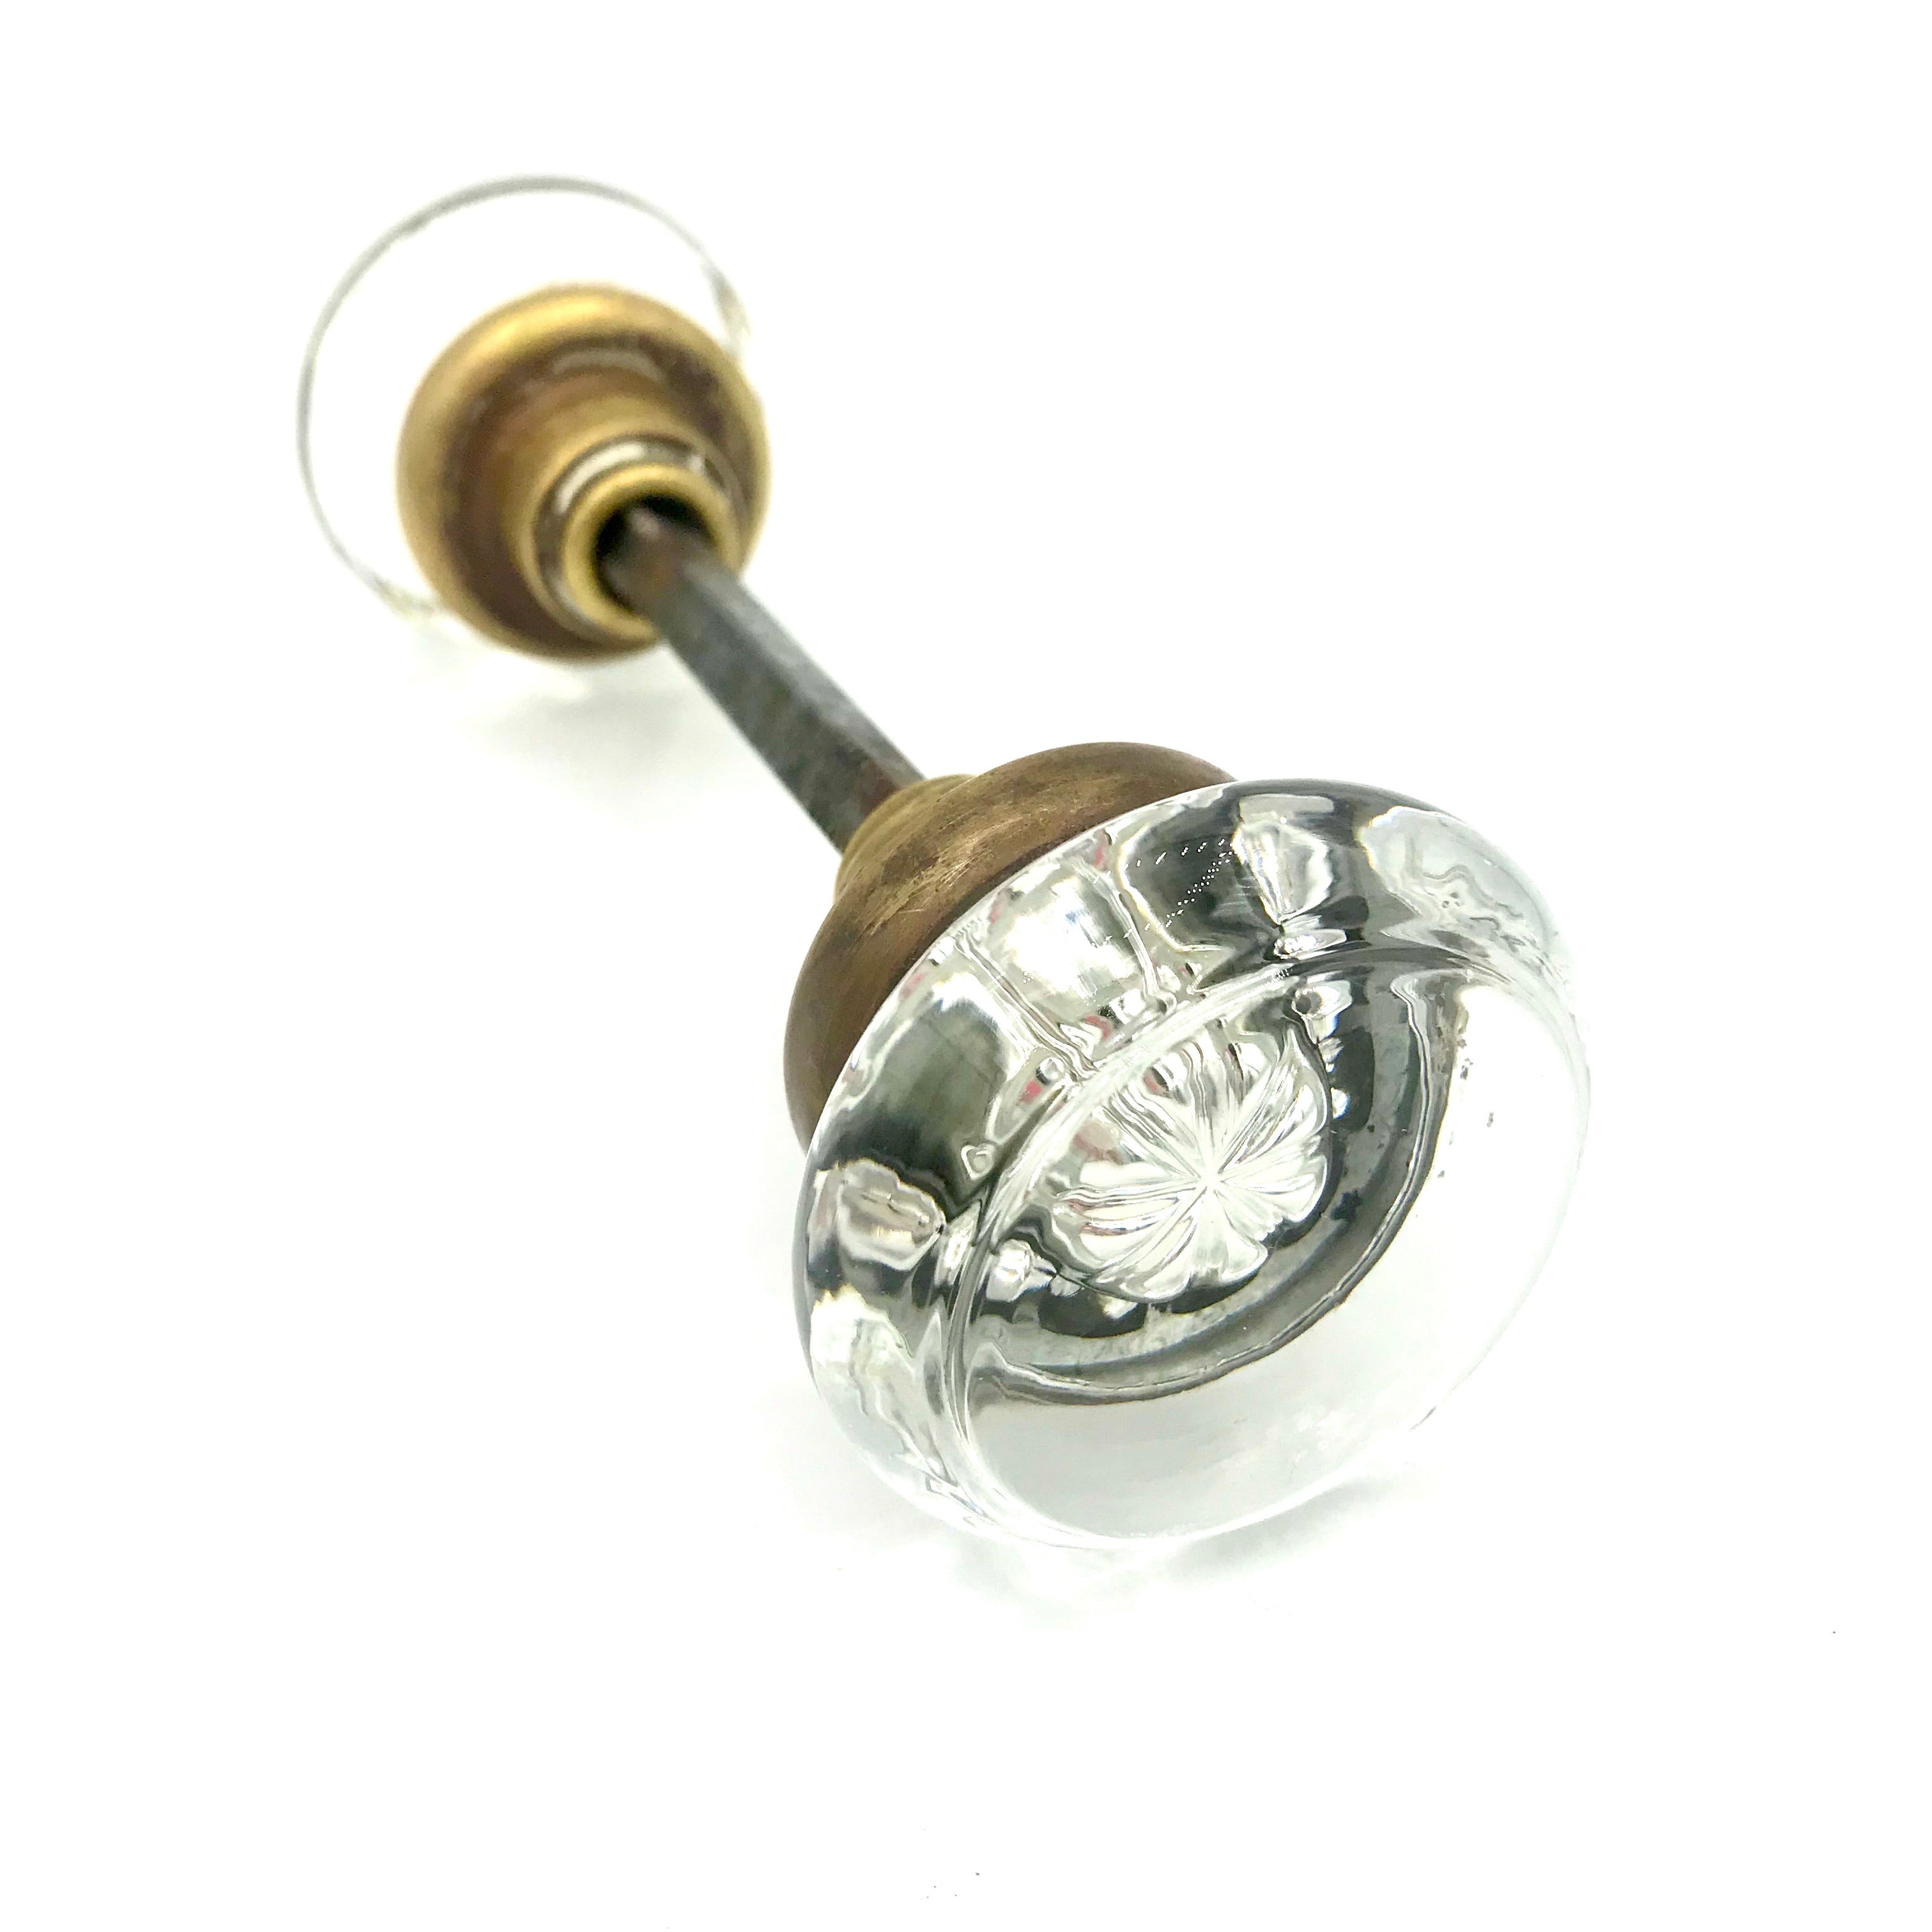 Antique Round Glass Doorknob